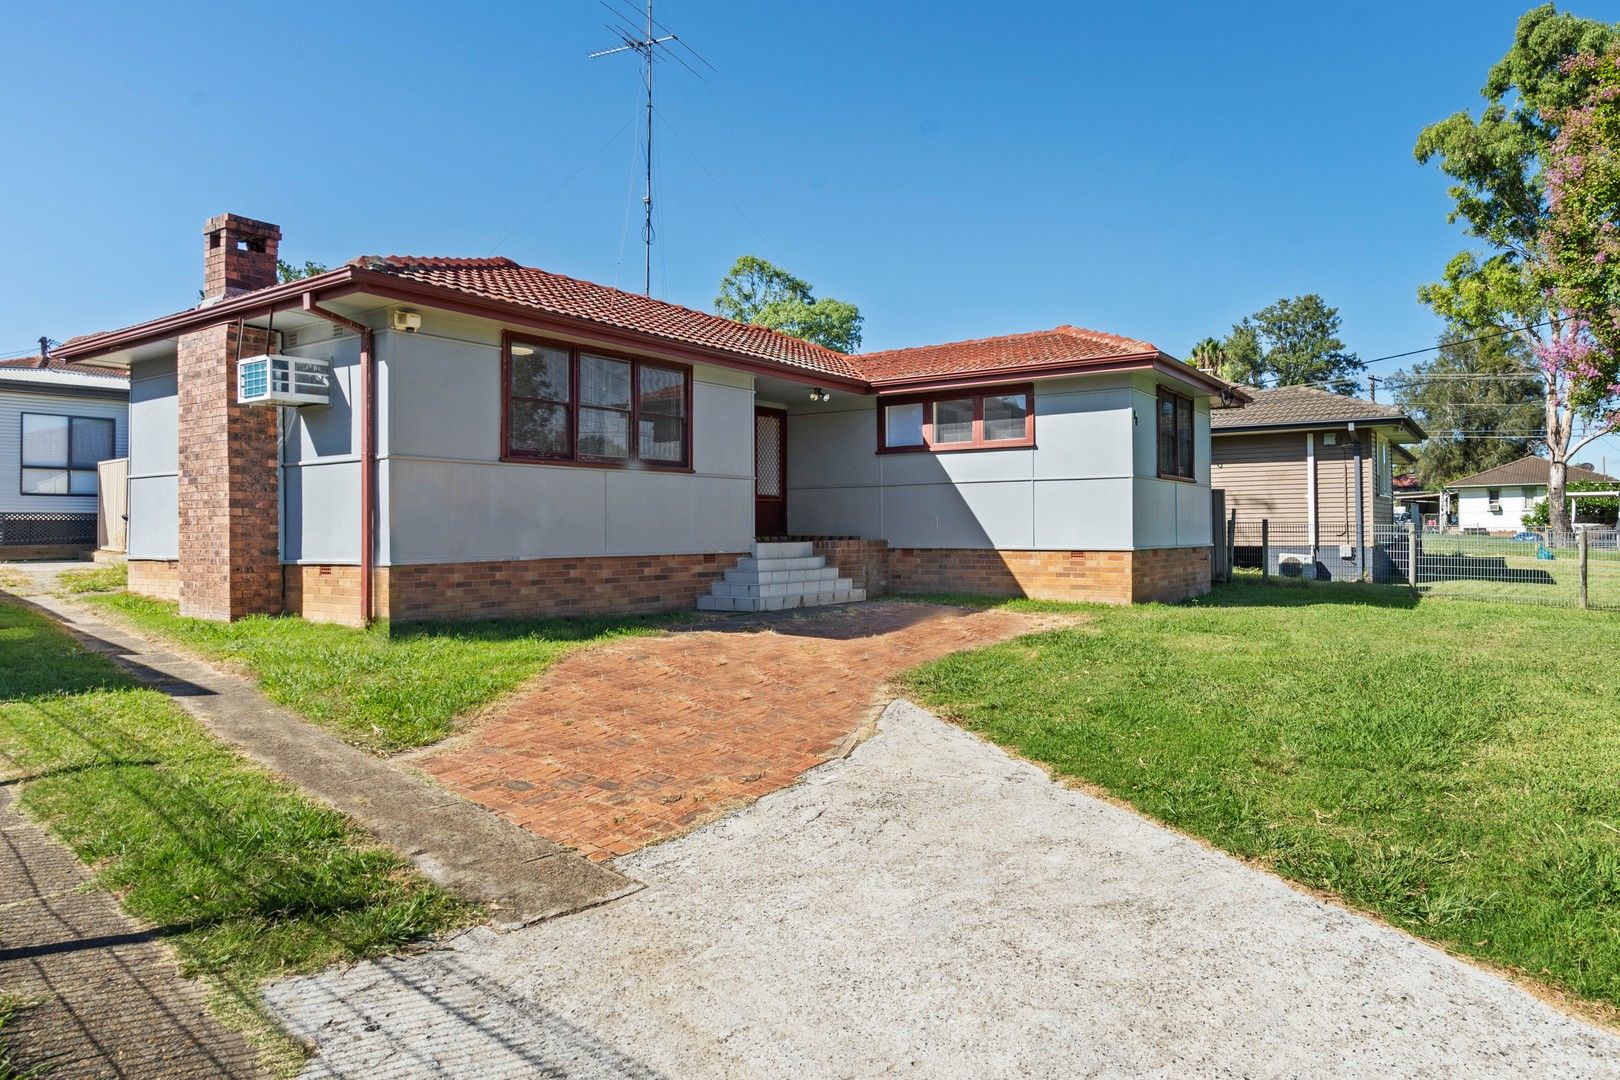 3 bedrooms Apartment / Unit / Flat in 17 Mawson Road TREGEAR NSW, 2770